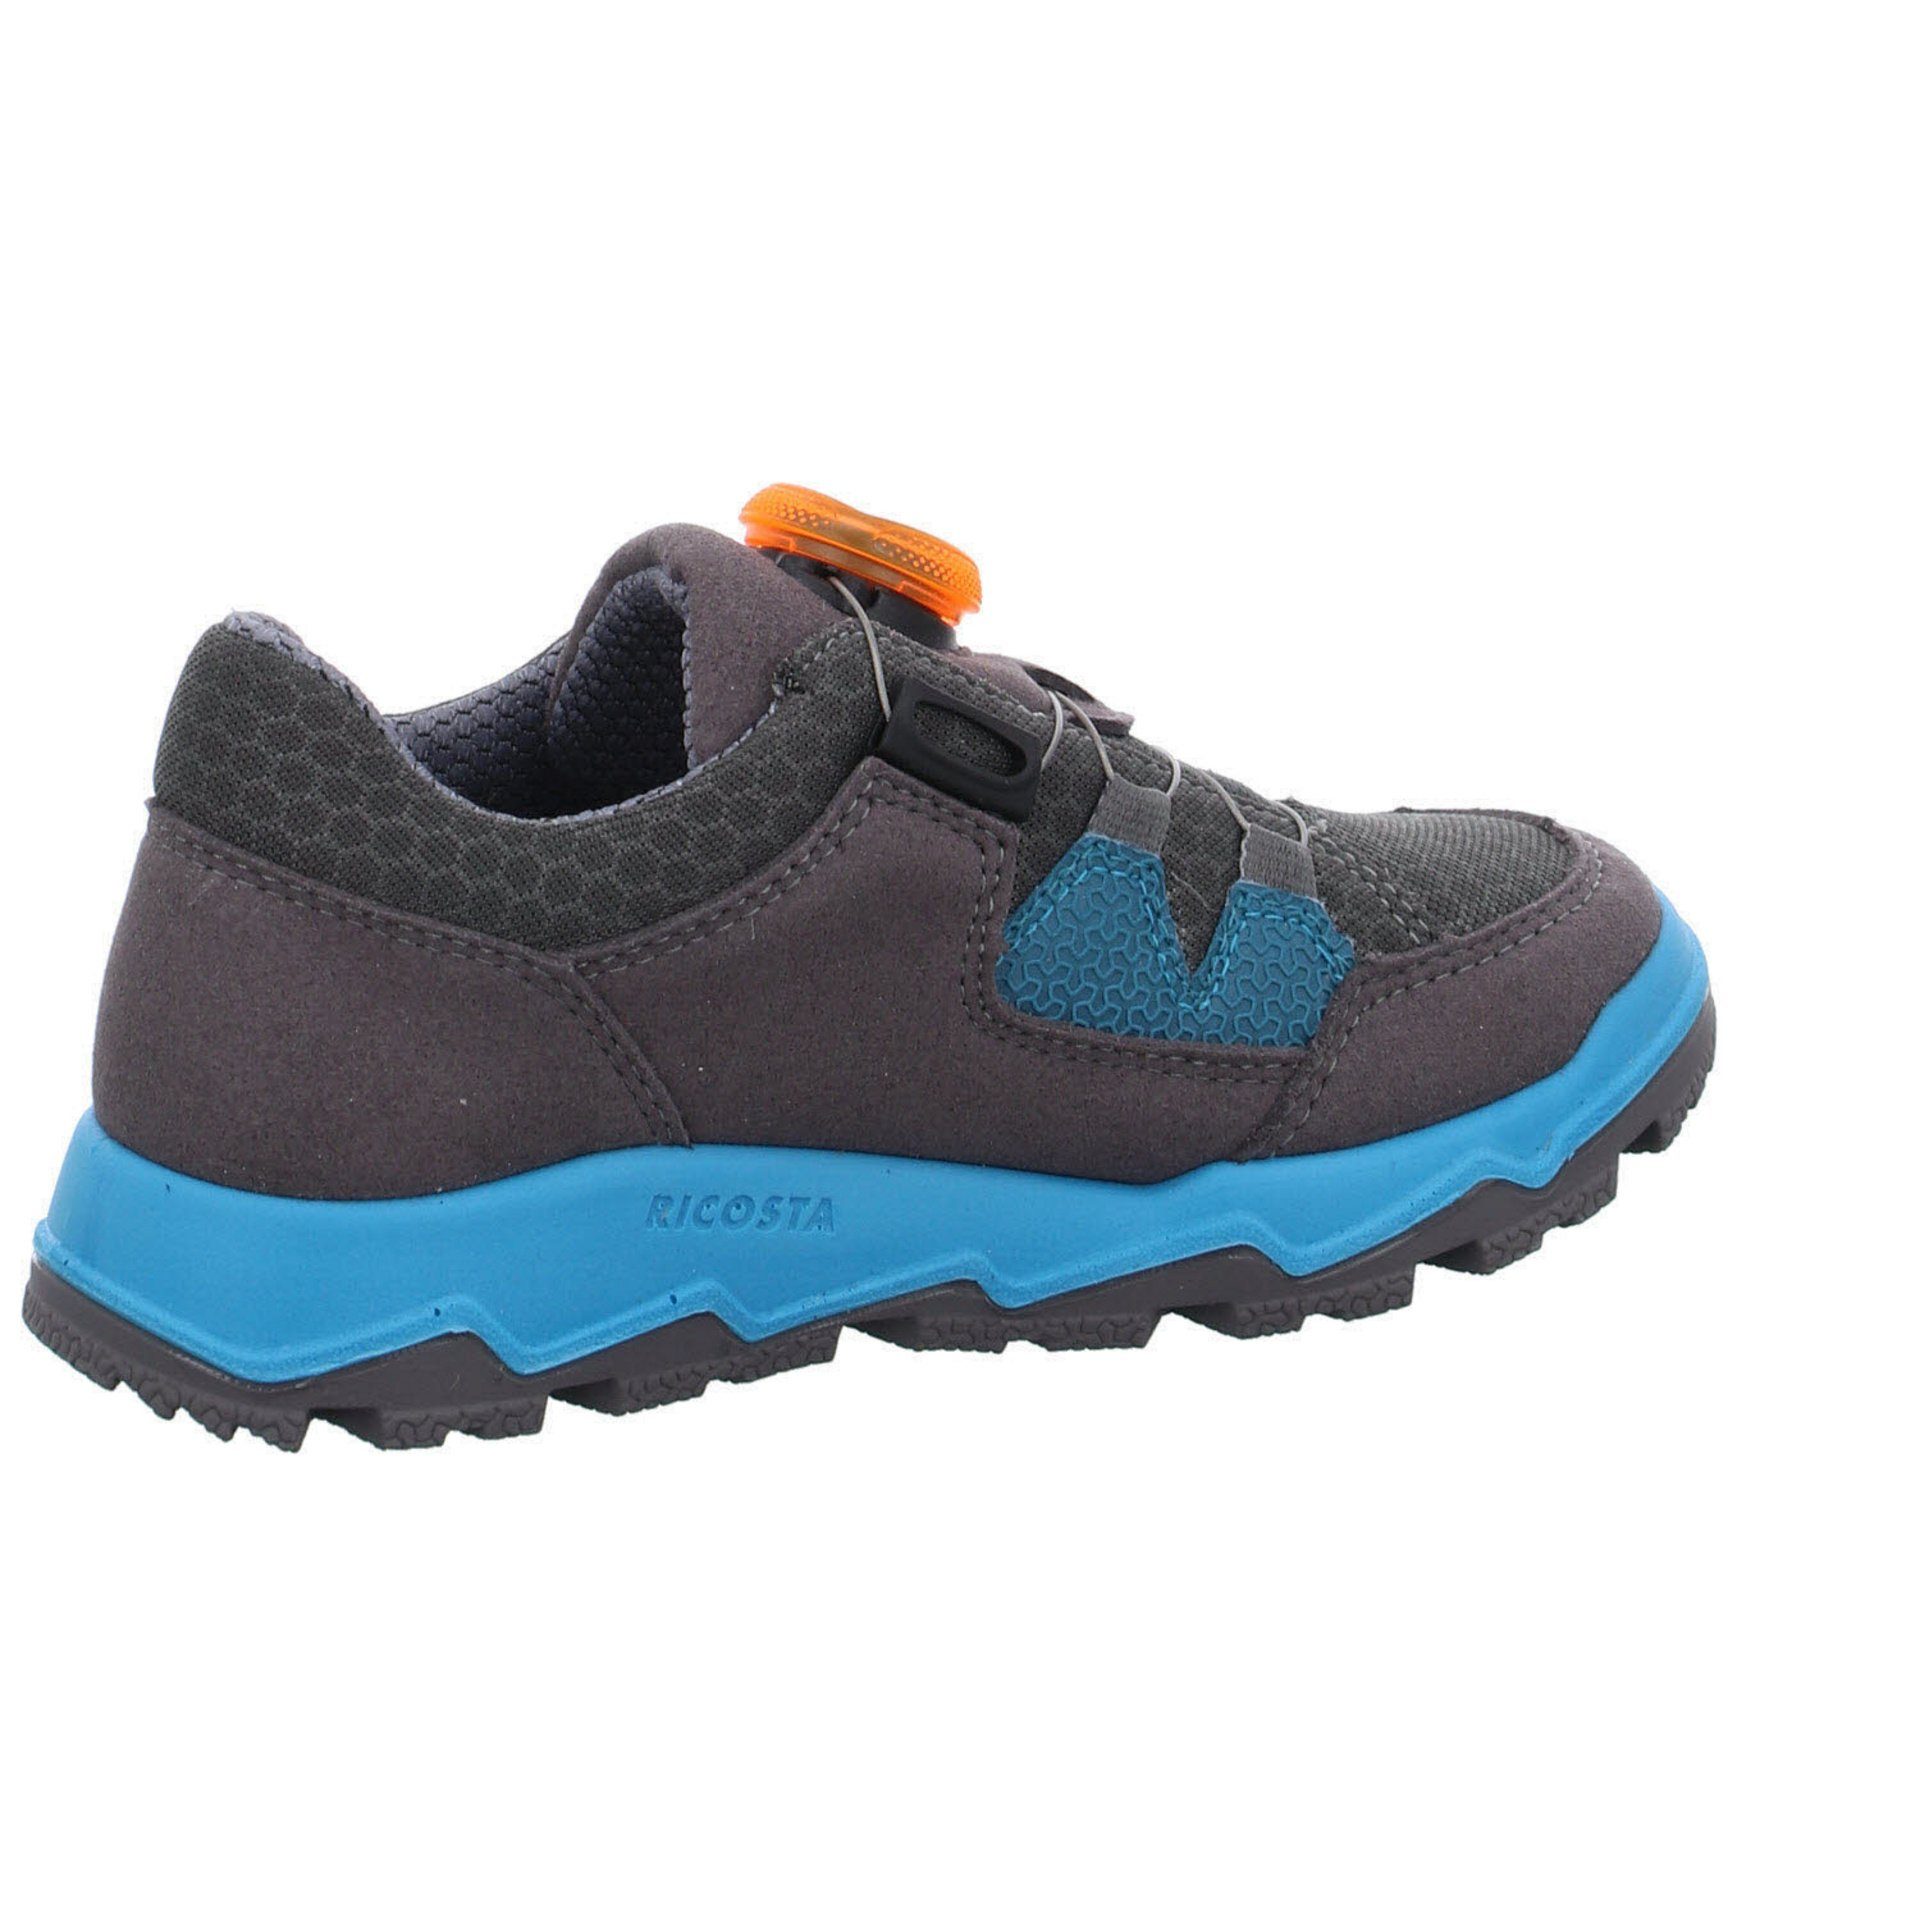 Jungen Schnürhalbschuhe Leder-/Textilkombination Ricosta Sneaker graphit/grau Canyon Halbschuh